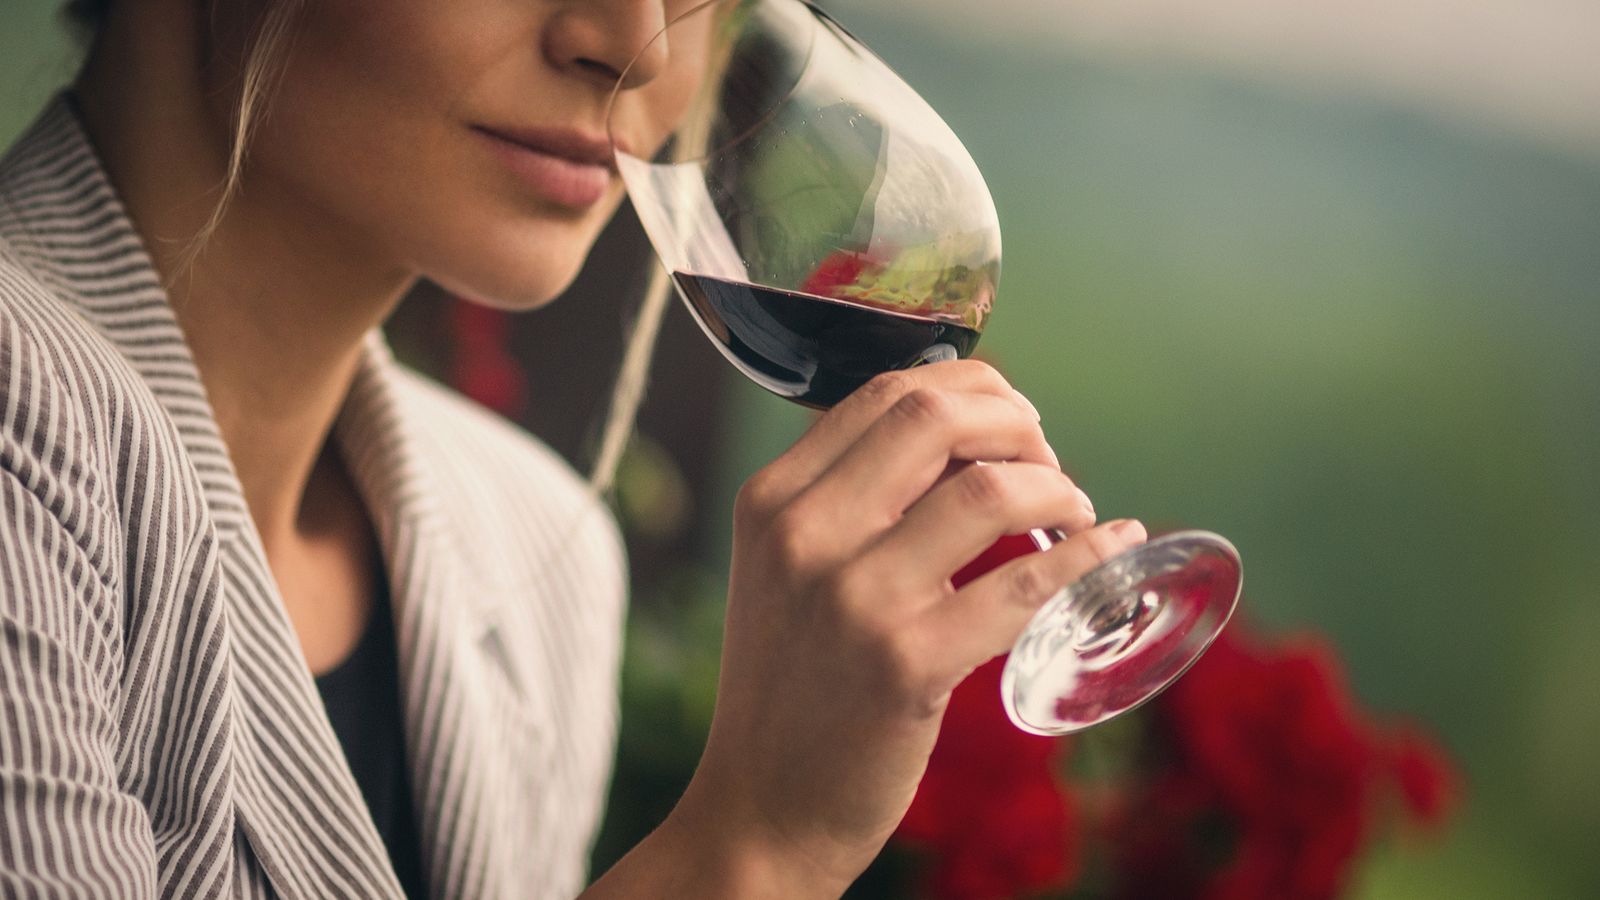 Frau trinkt ein Glas Wein